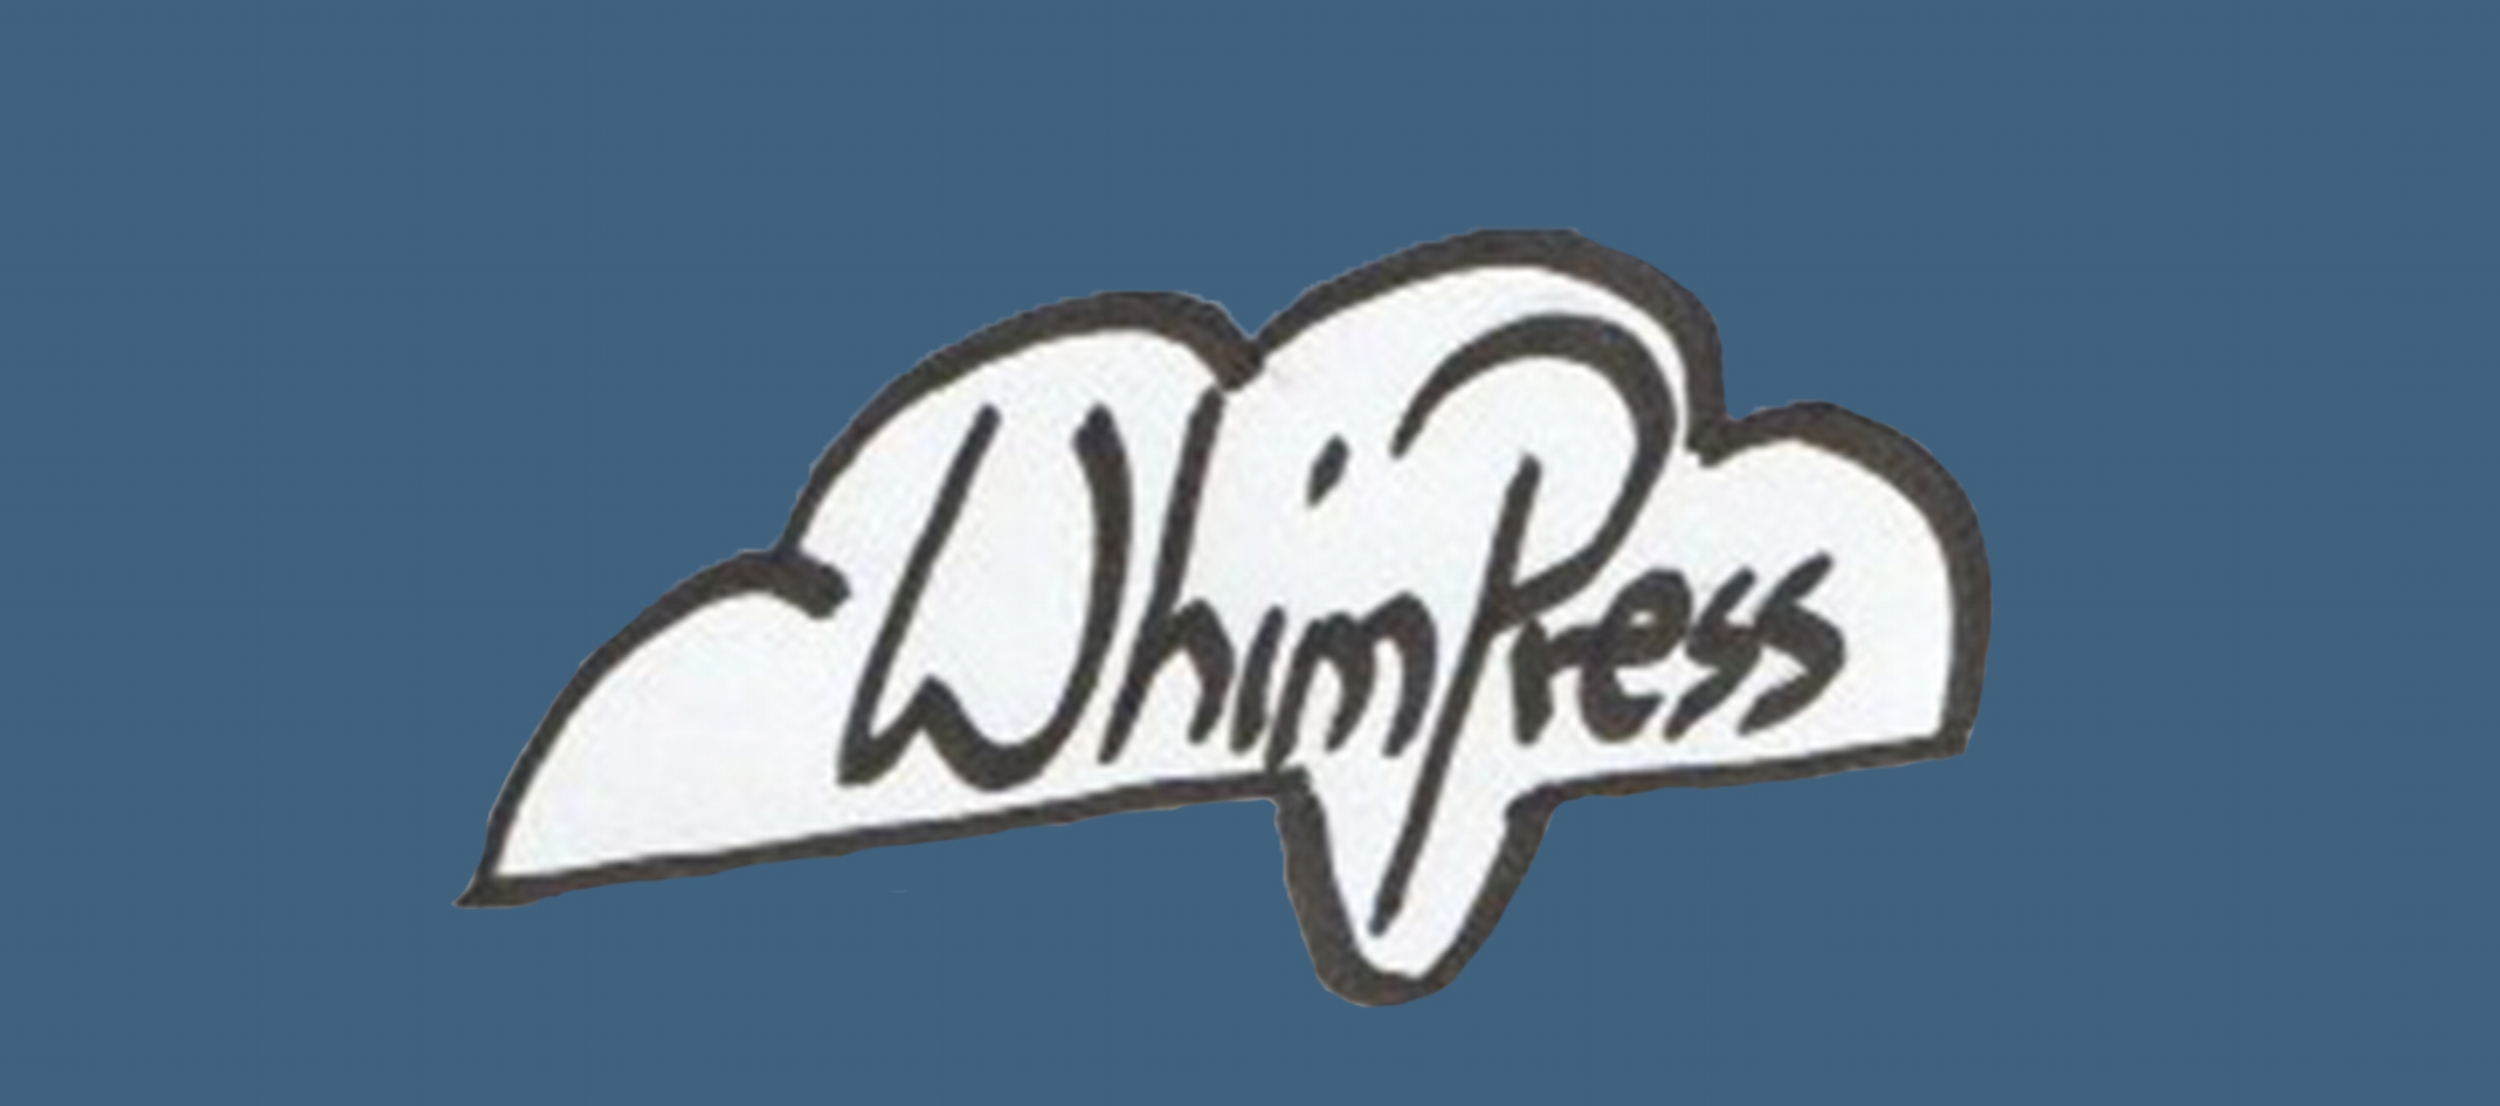 WhimPress